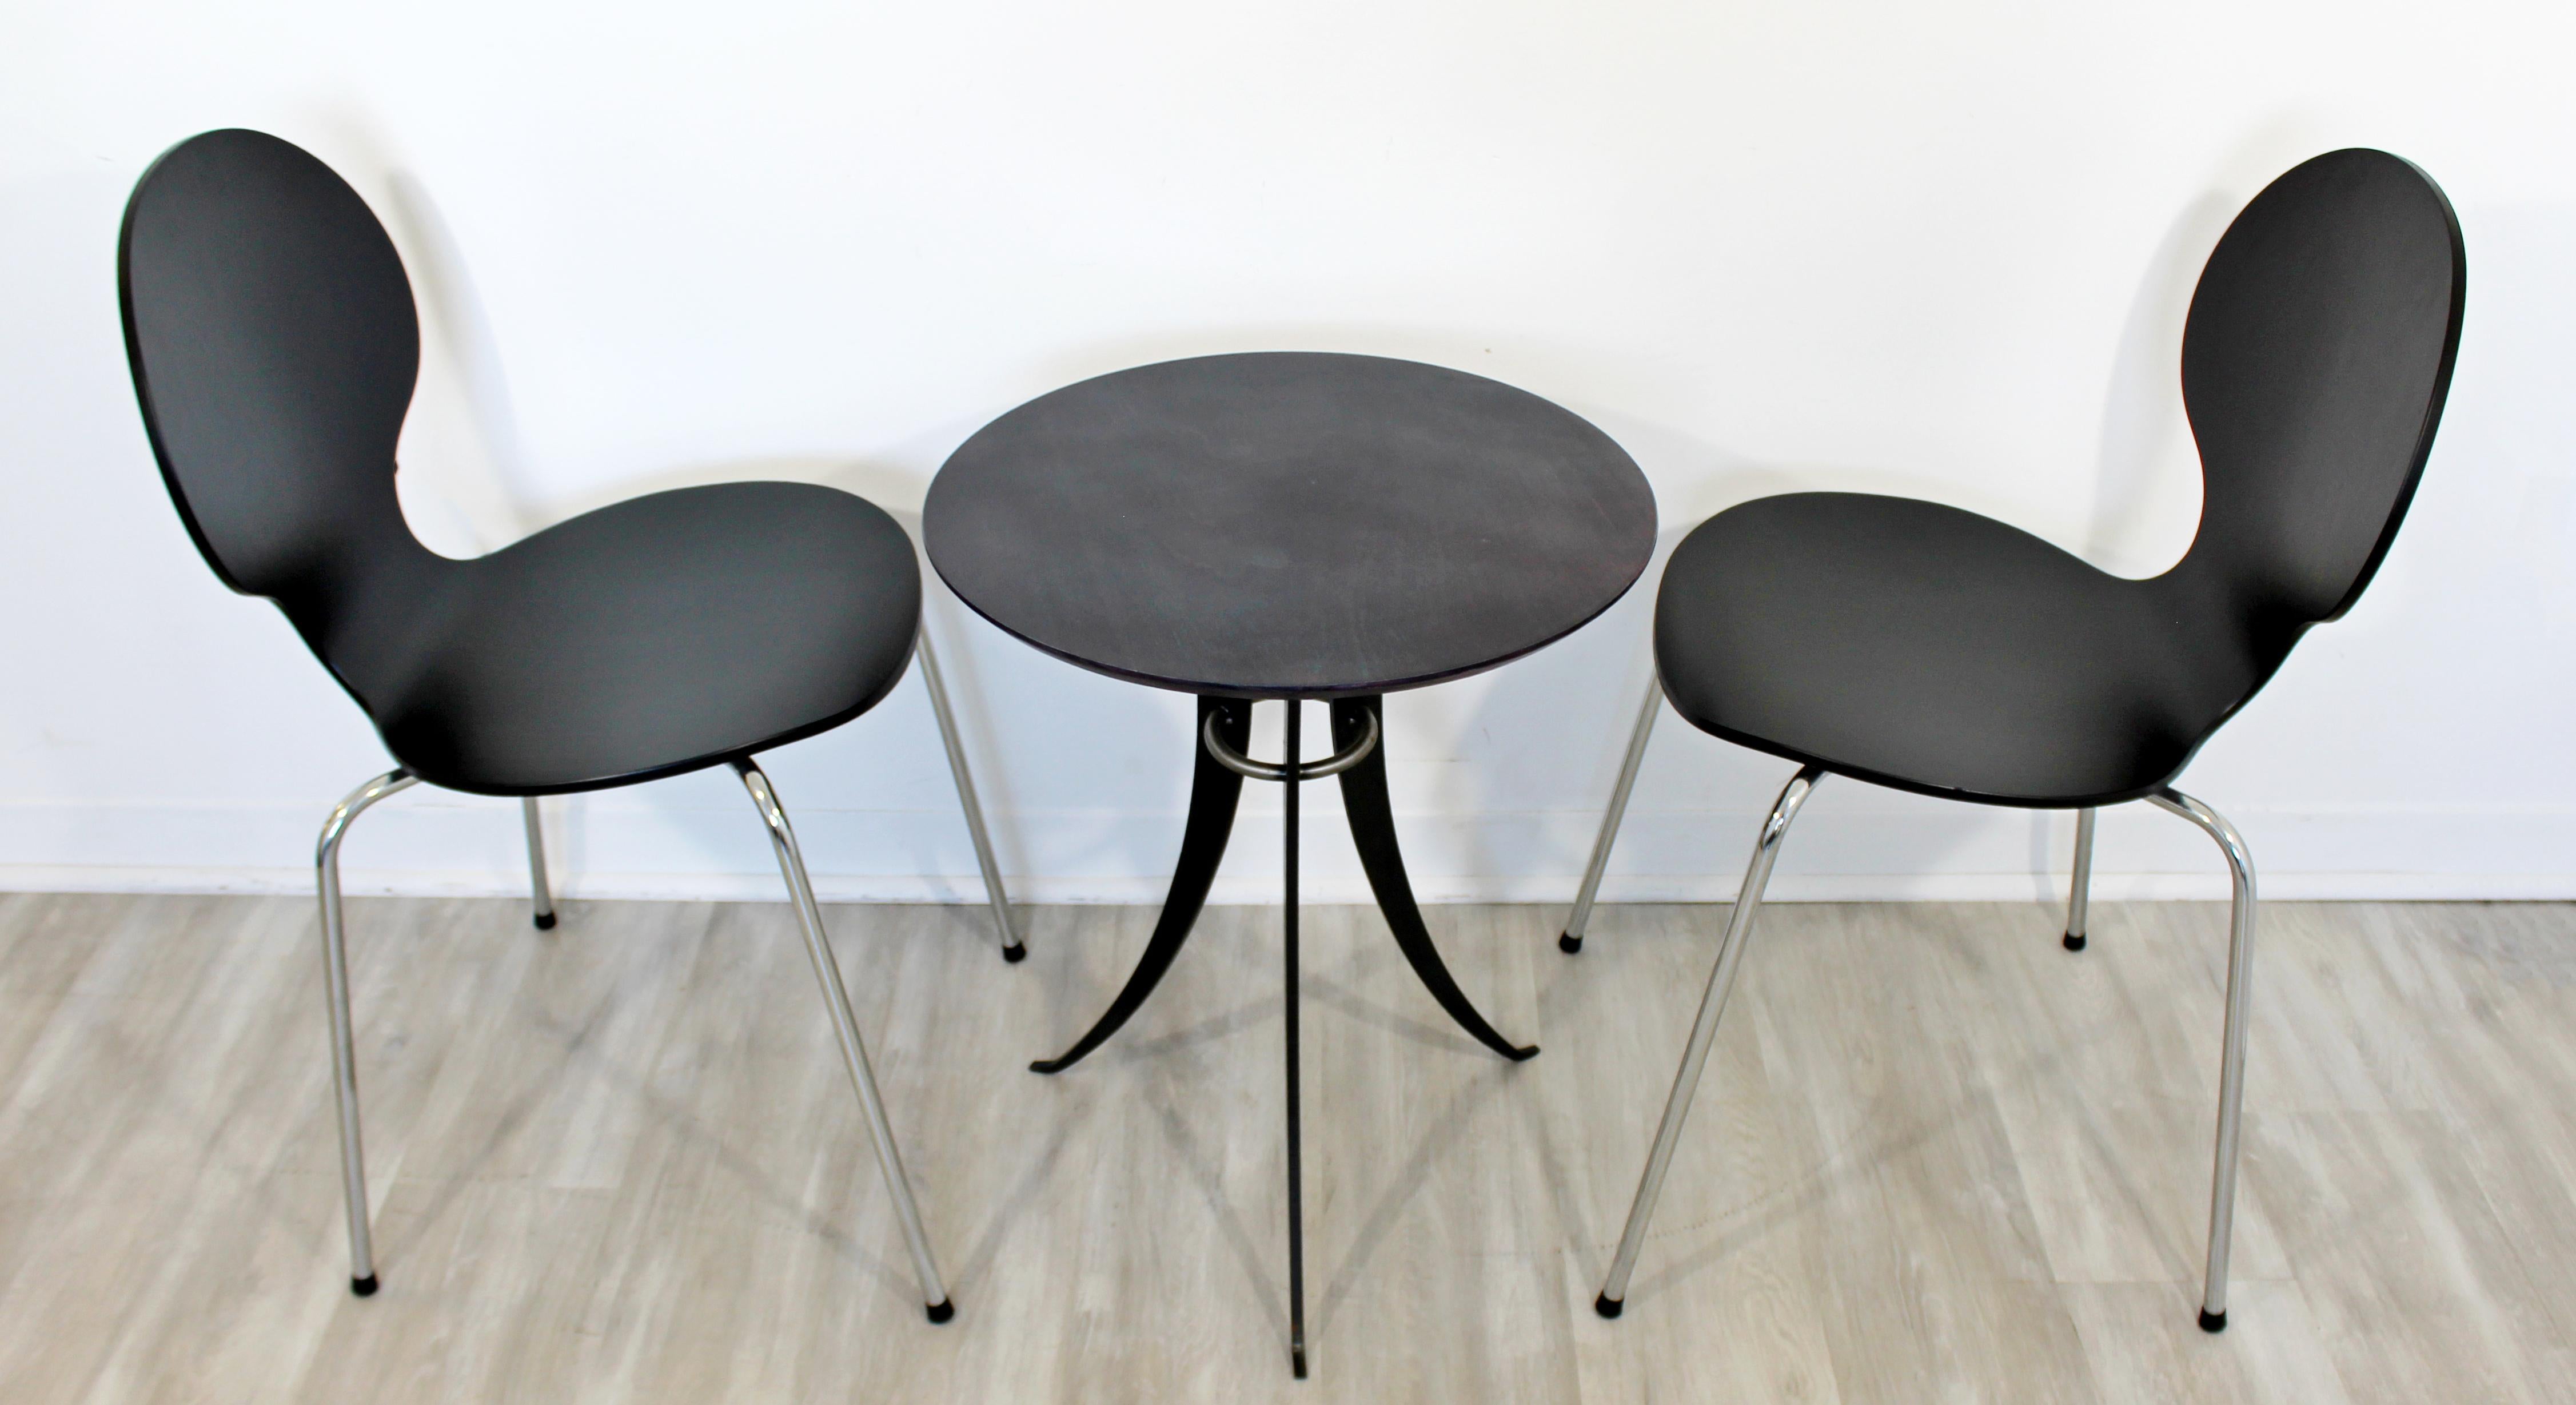 Mid-20th Century Mid-Century Modern Fritz Hansen Pair of Black Chairs & Cafe Table, 1960s Denmark